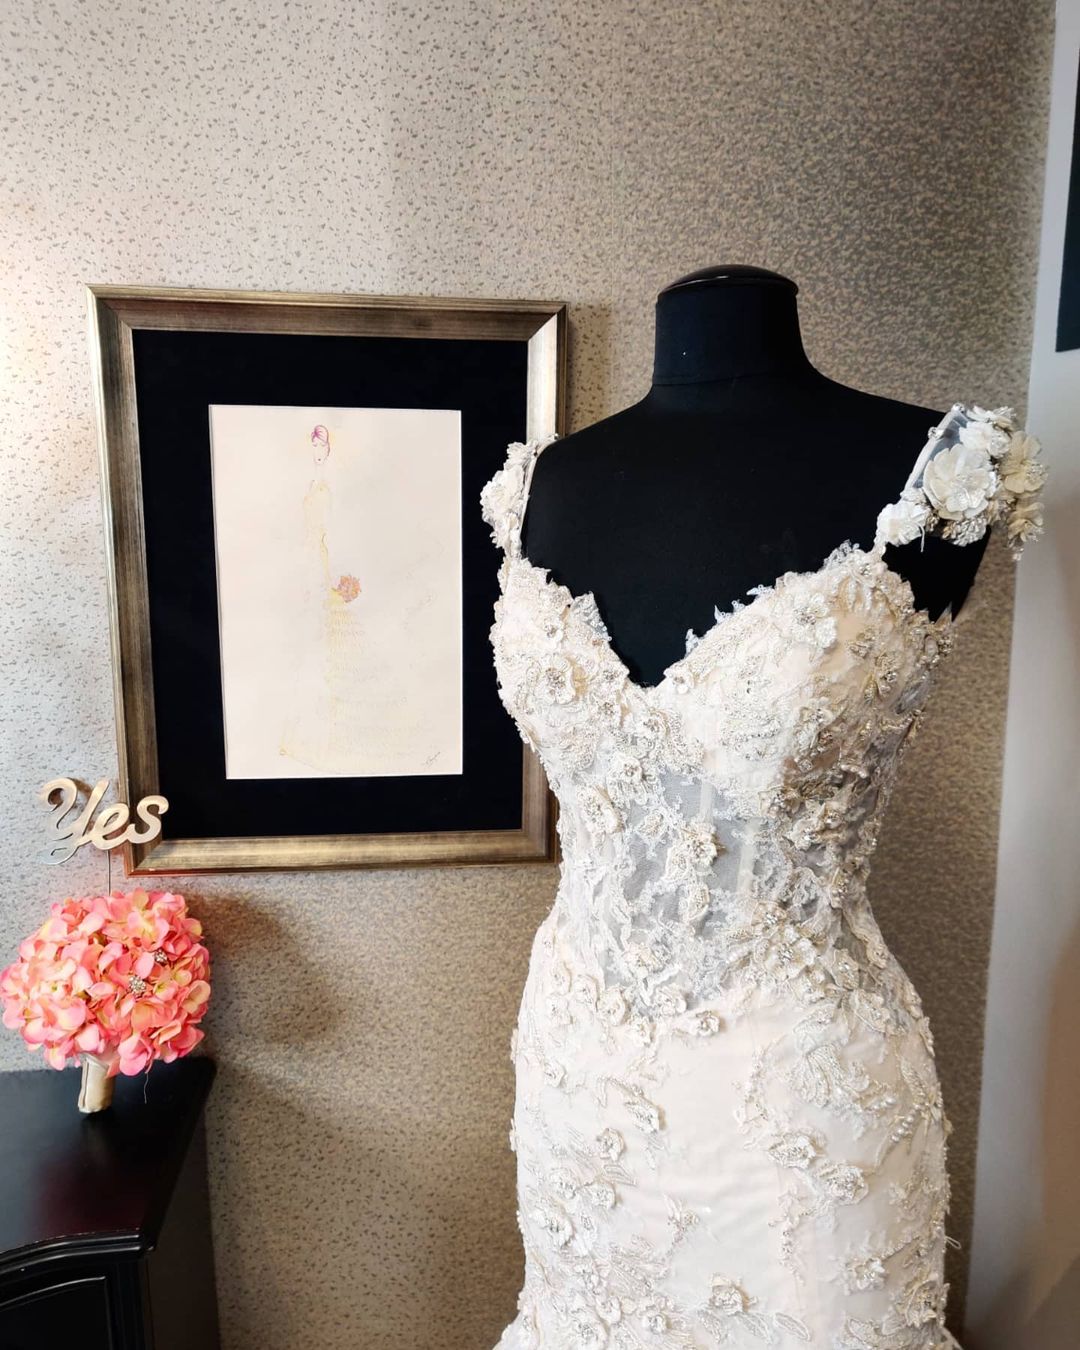 Amazing Mermaid Sweetheart Wedding Dress With Lace-Wedding Dresses-BallBride